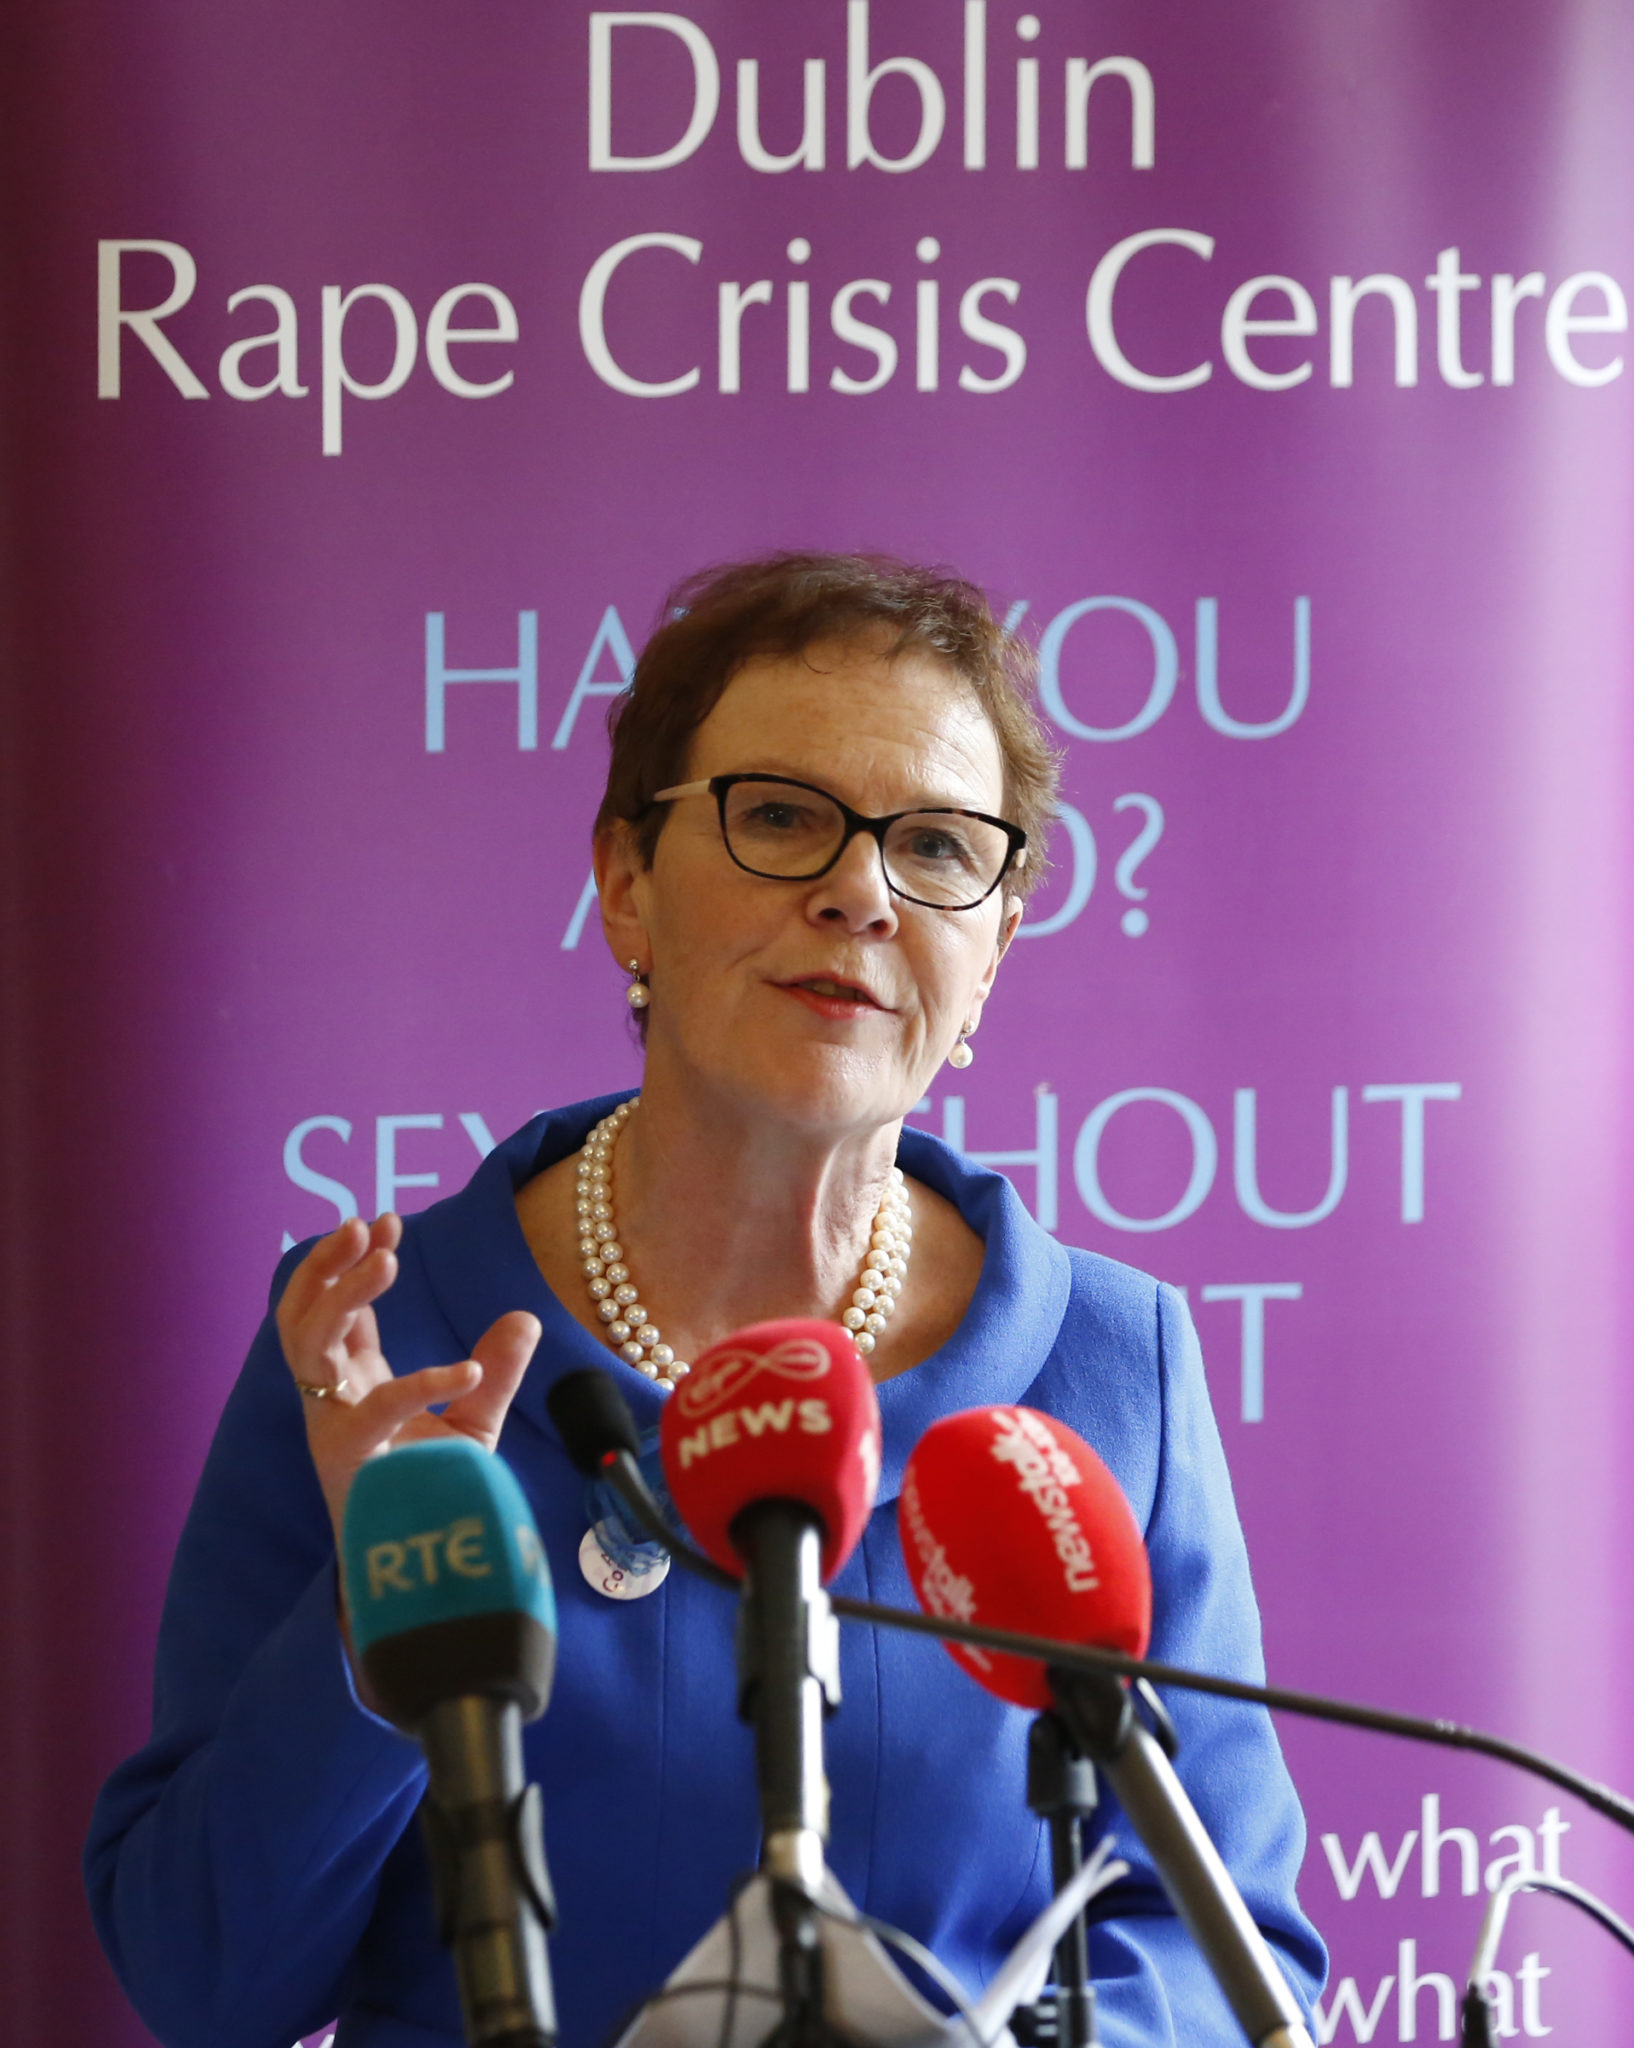 Dublin Rape Crisis Centre CEO Noeline Blackwell